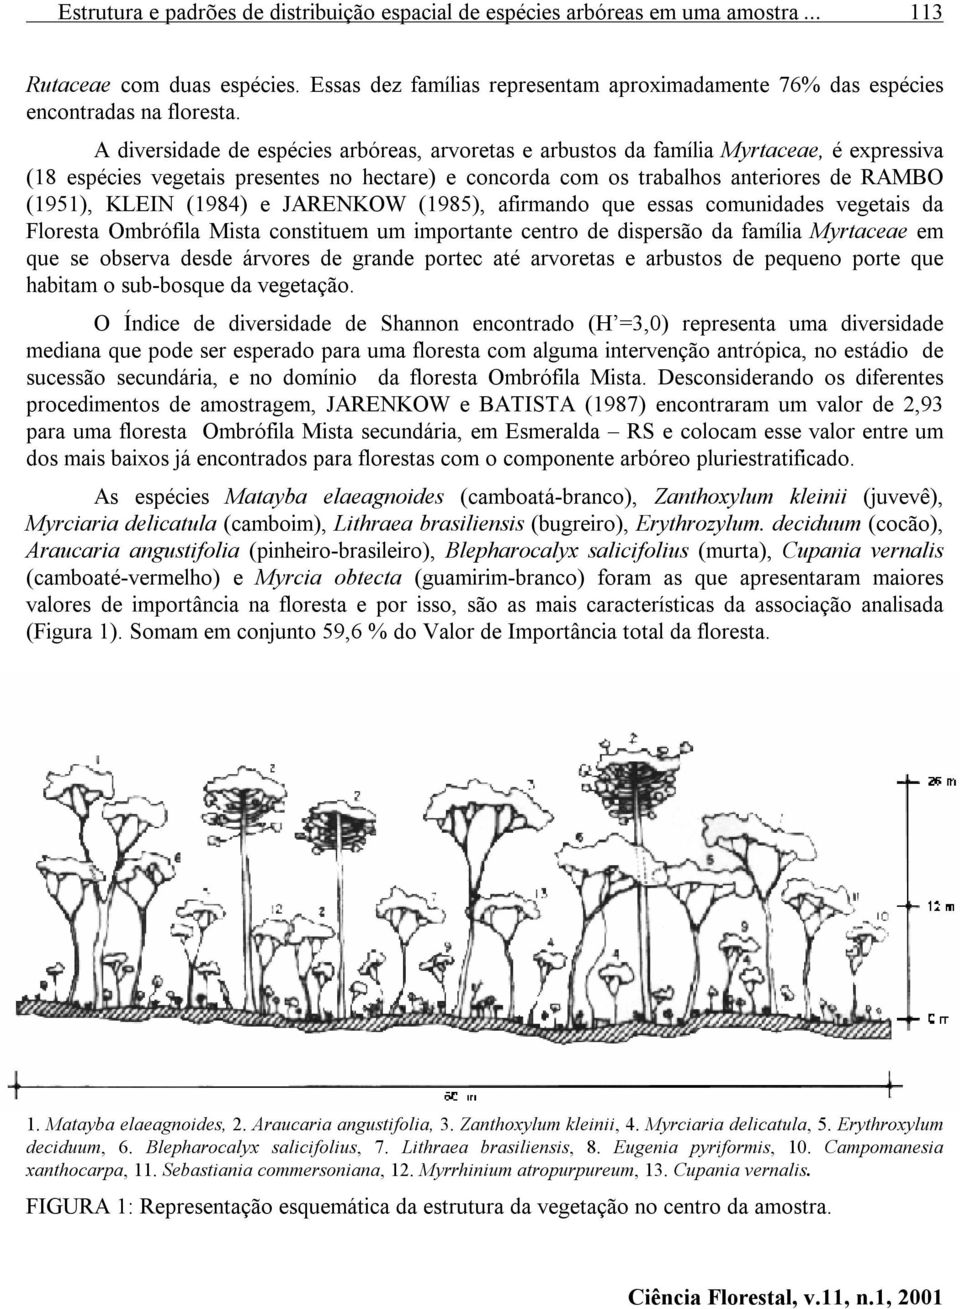 A diversidade de espécies arbóreas, arvoretas e arbustos da família Myrtaceae, é expressiva (18 espécies vegetais presentes no hectare) e concorda com os trabalhos anteriores de RAMBO (1951), KLEIN